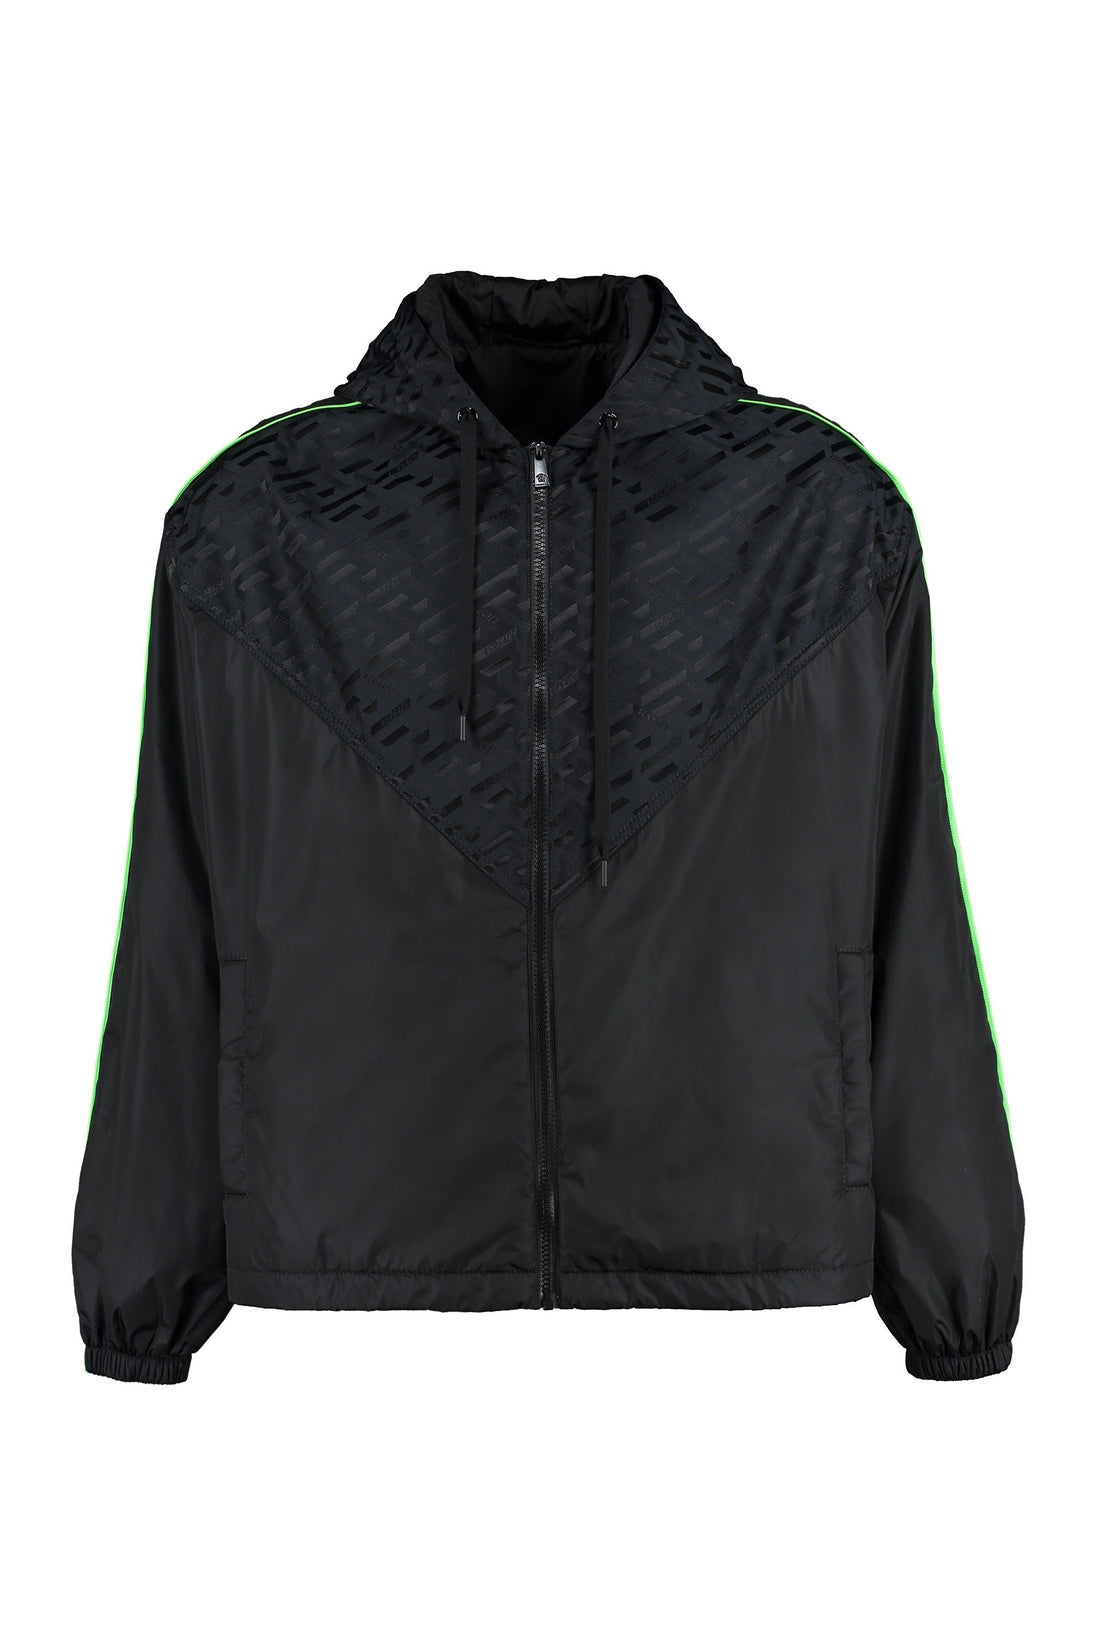 Versace-OUTLET-SALE-Hooded nylon jacket-ARCHIVIST